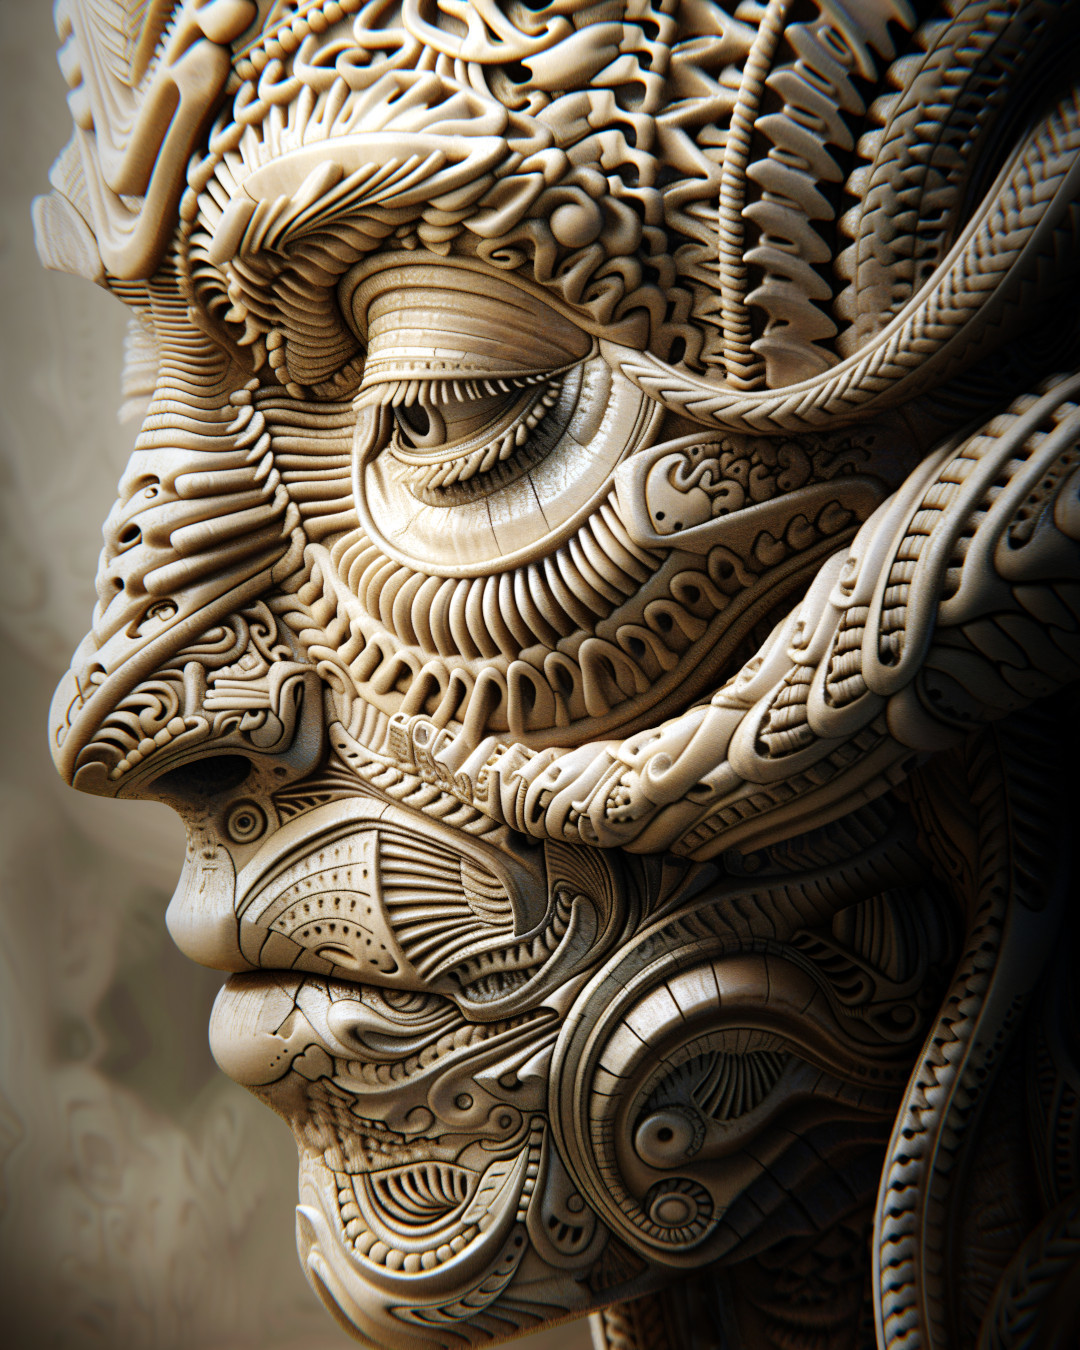 Alien face, hyperrealistic details, wooden sculpture